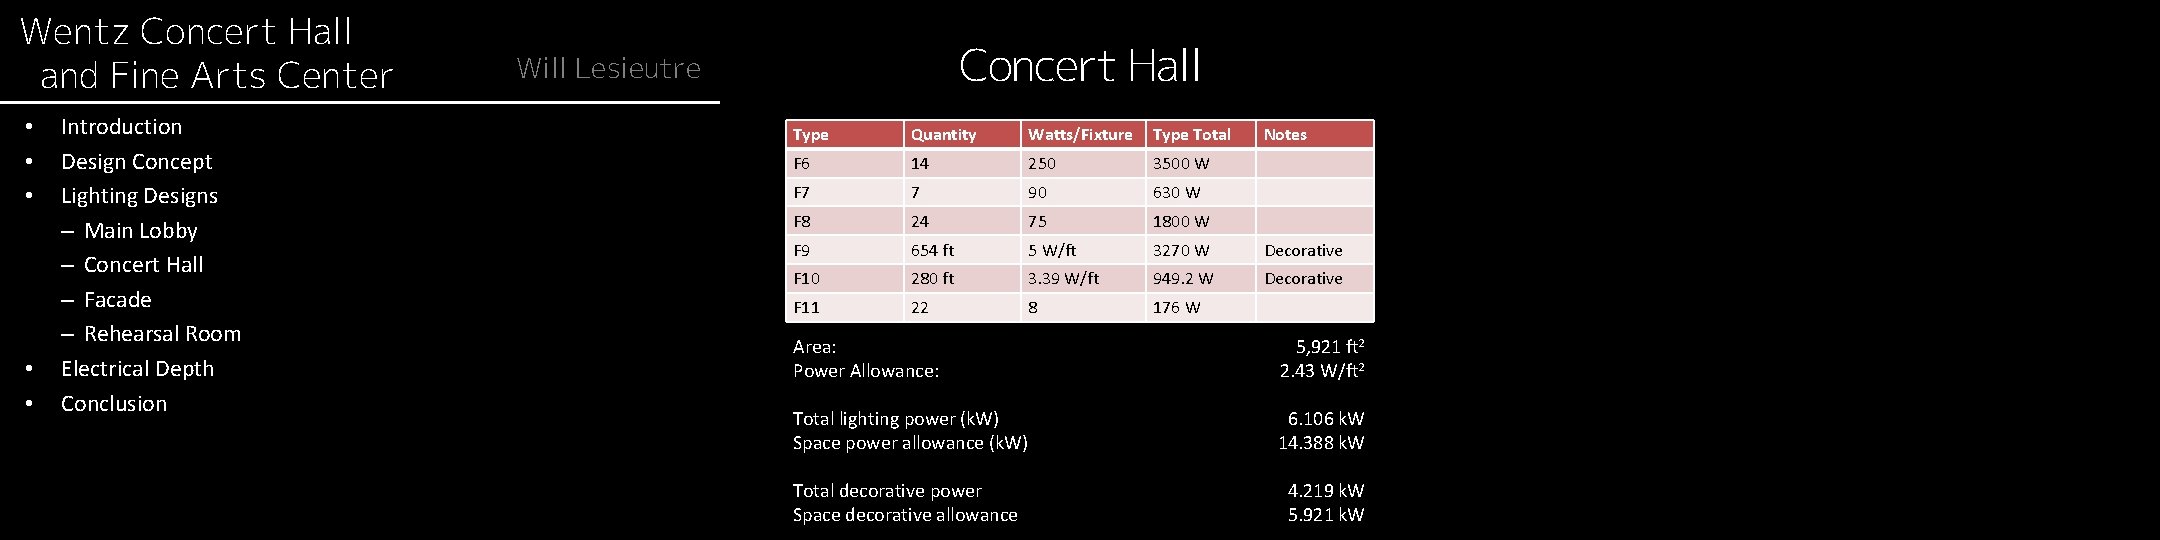 Wentz Concert Hall and Fine Arts Center • • • Introduction Design Concept Lighting